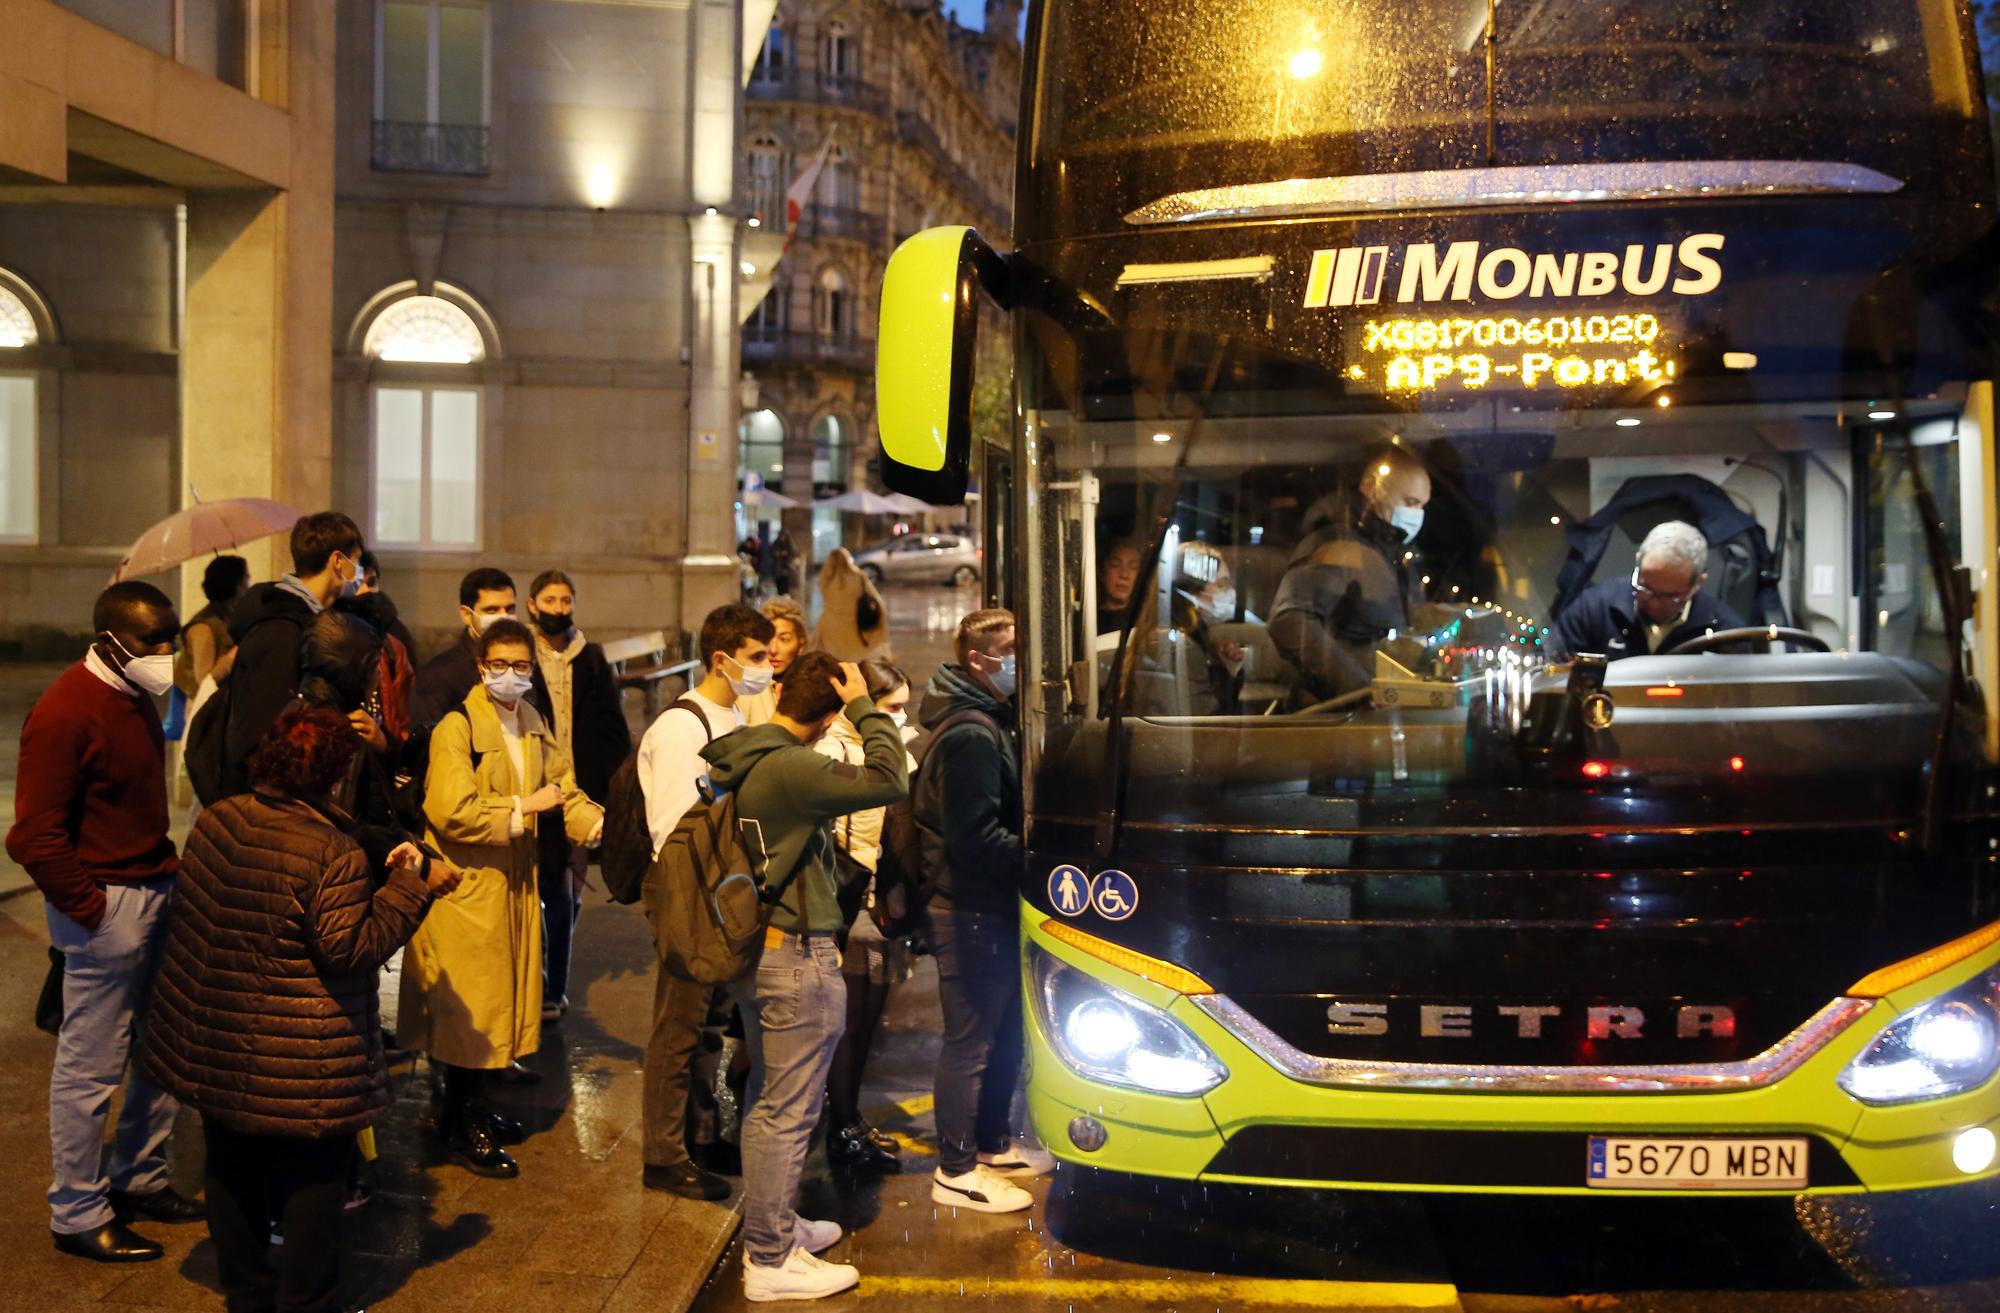 La huelga en el ferrocarril abarrota los autobuses en Vigo